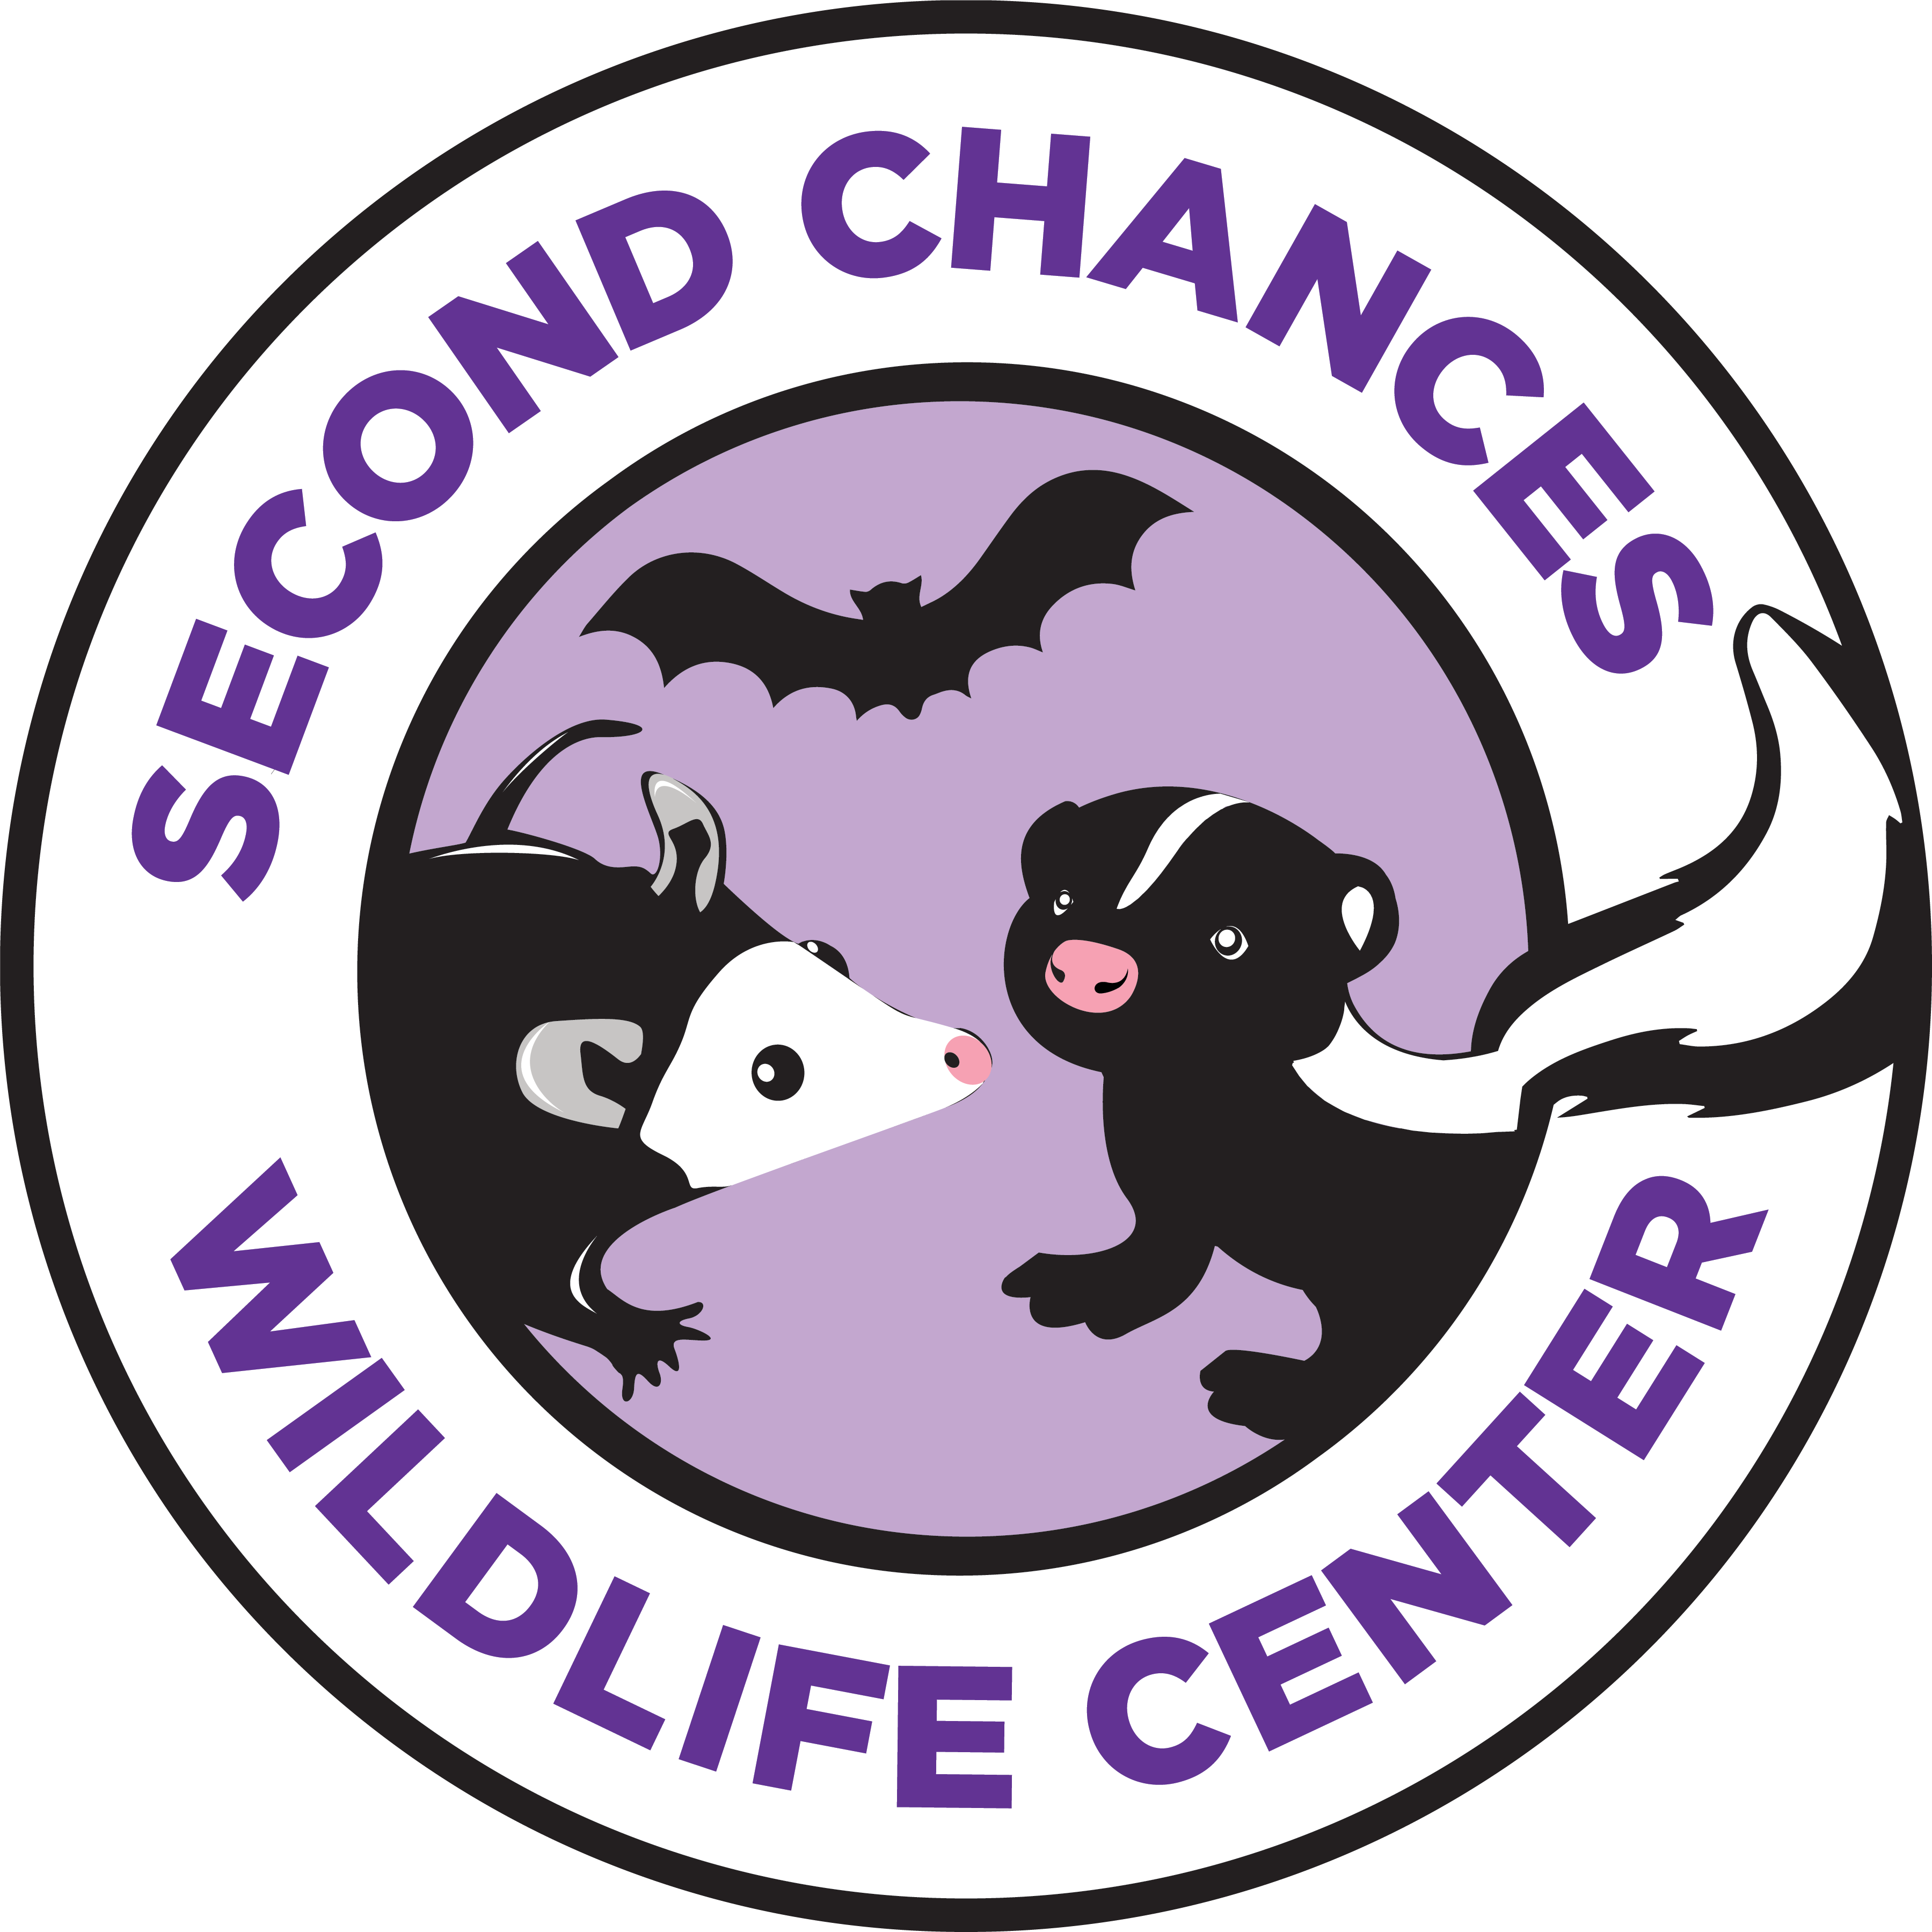 Second Chances Wildlife Center